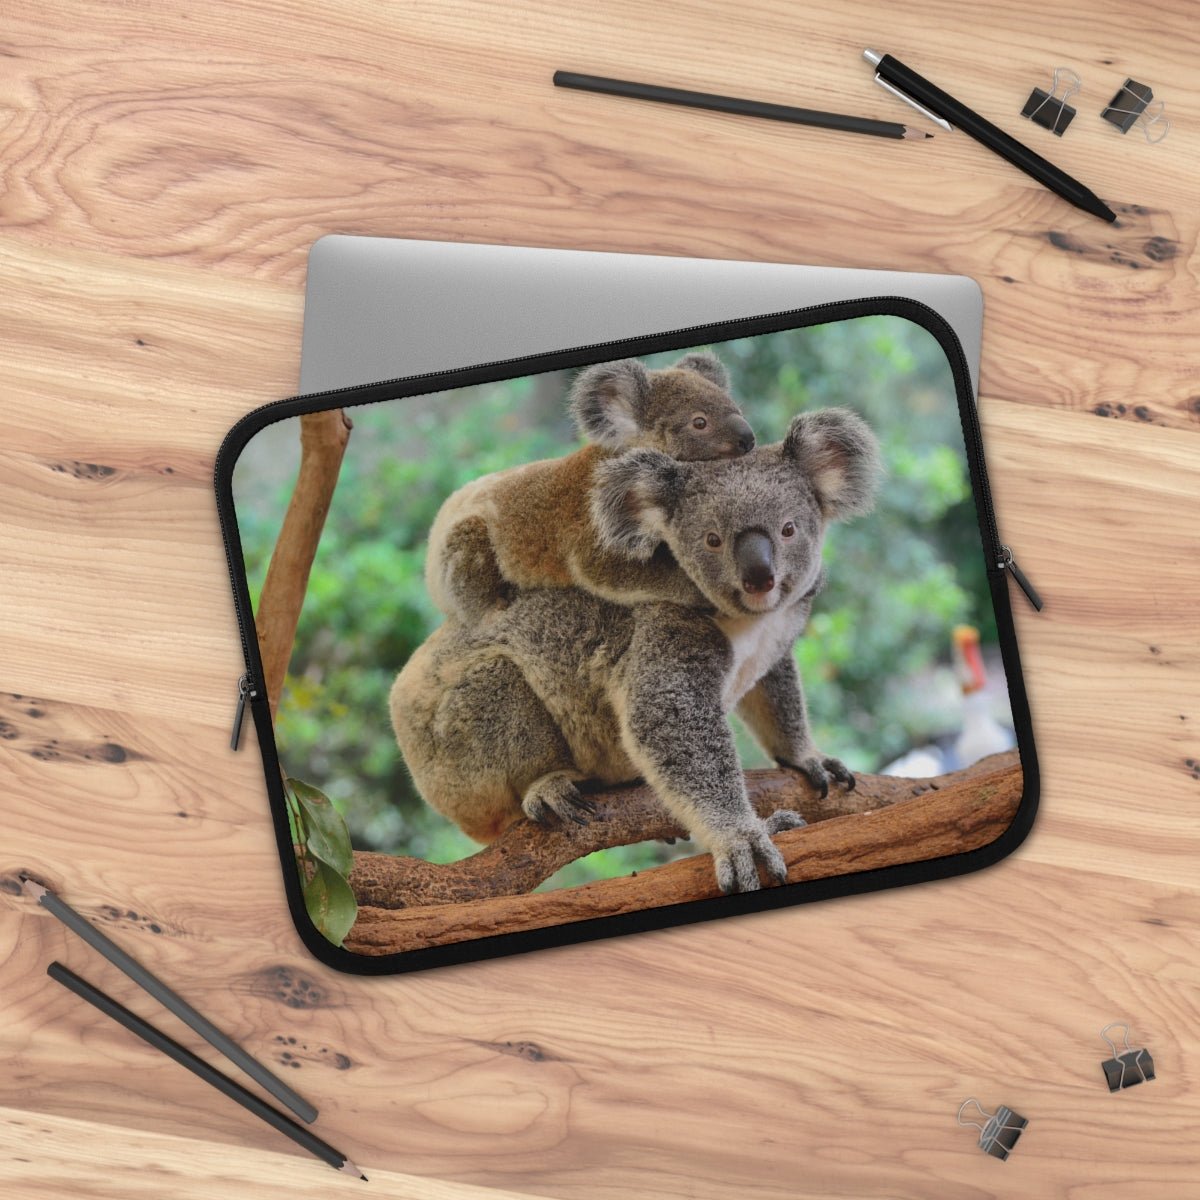 Mom and Baby Koala Bears Laptop Sleeve - Puffin Lime